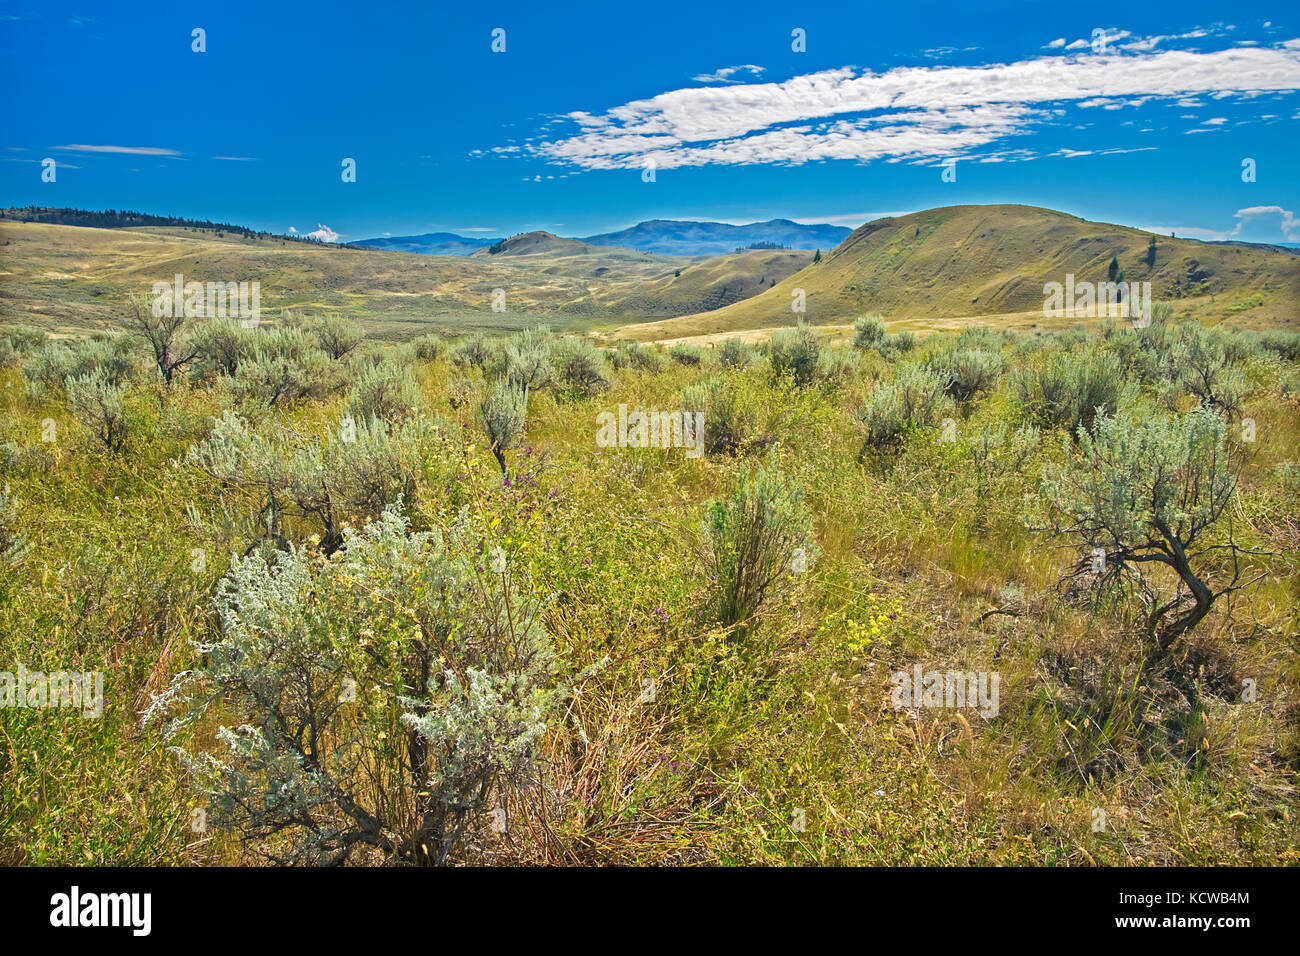 Sagebrush and Grasslands, Thompson Valley, Kamloops, British Columbia, Canada Stock Photo